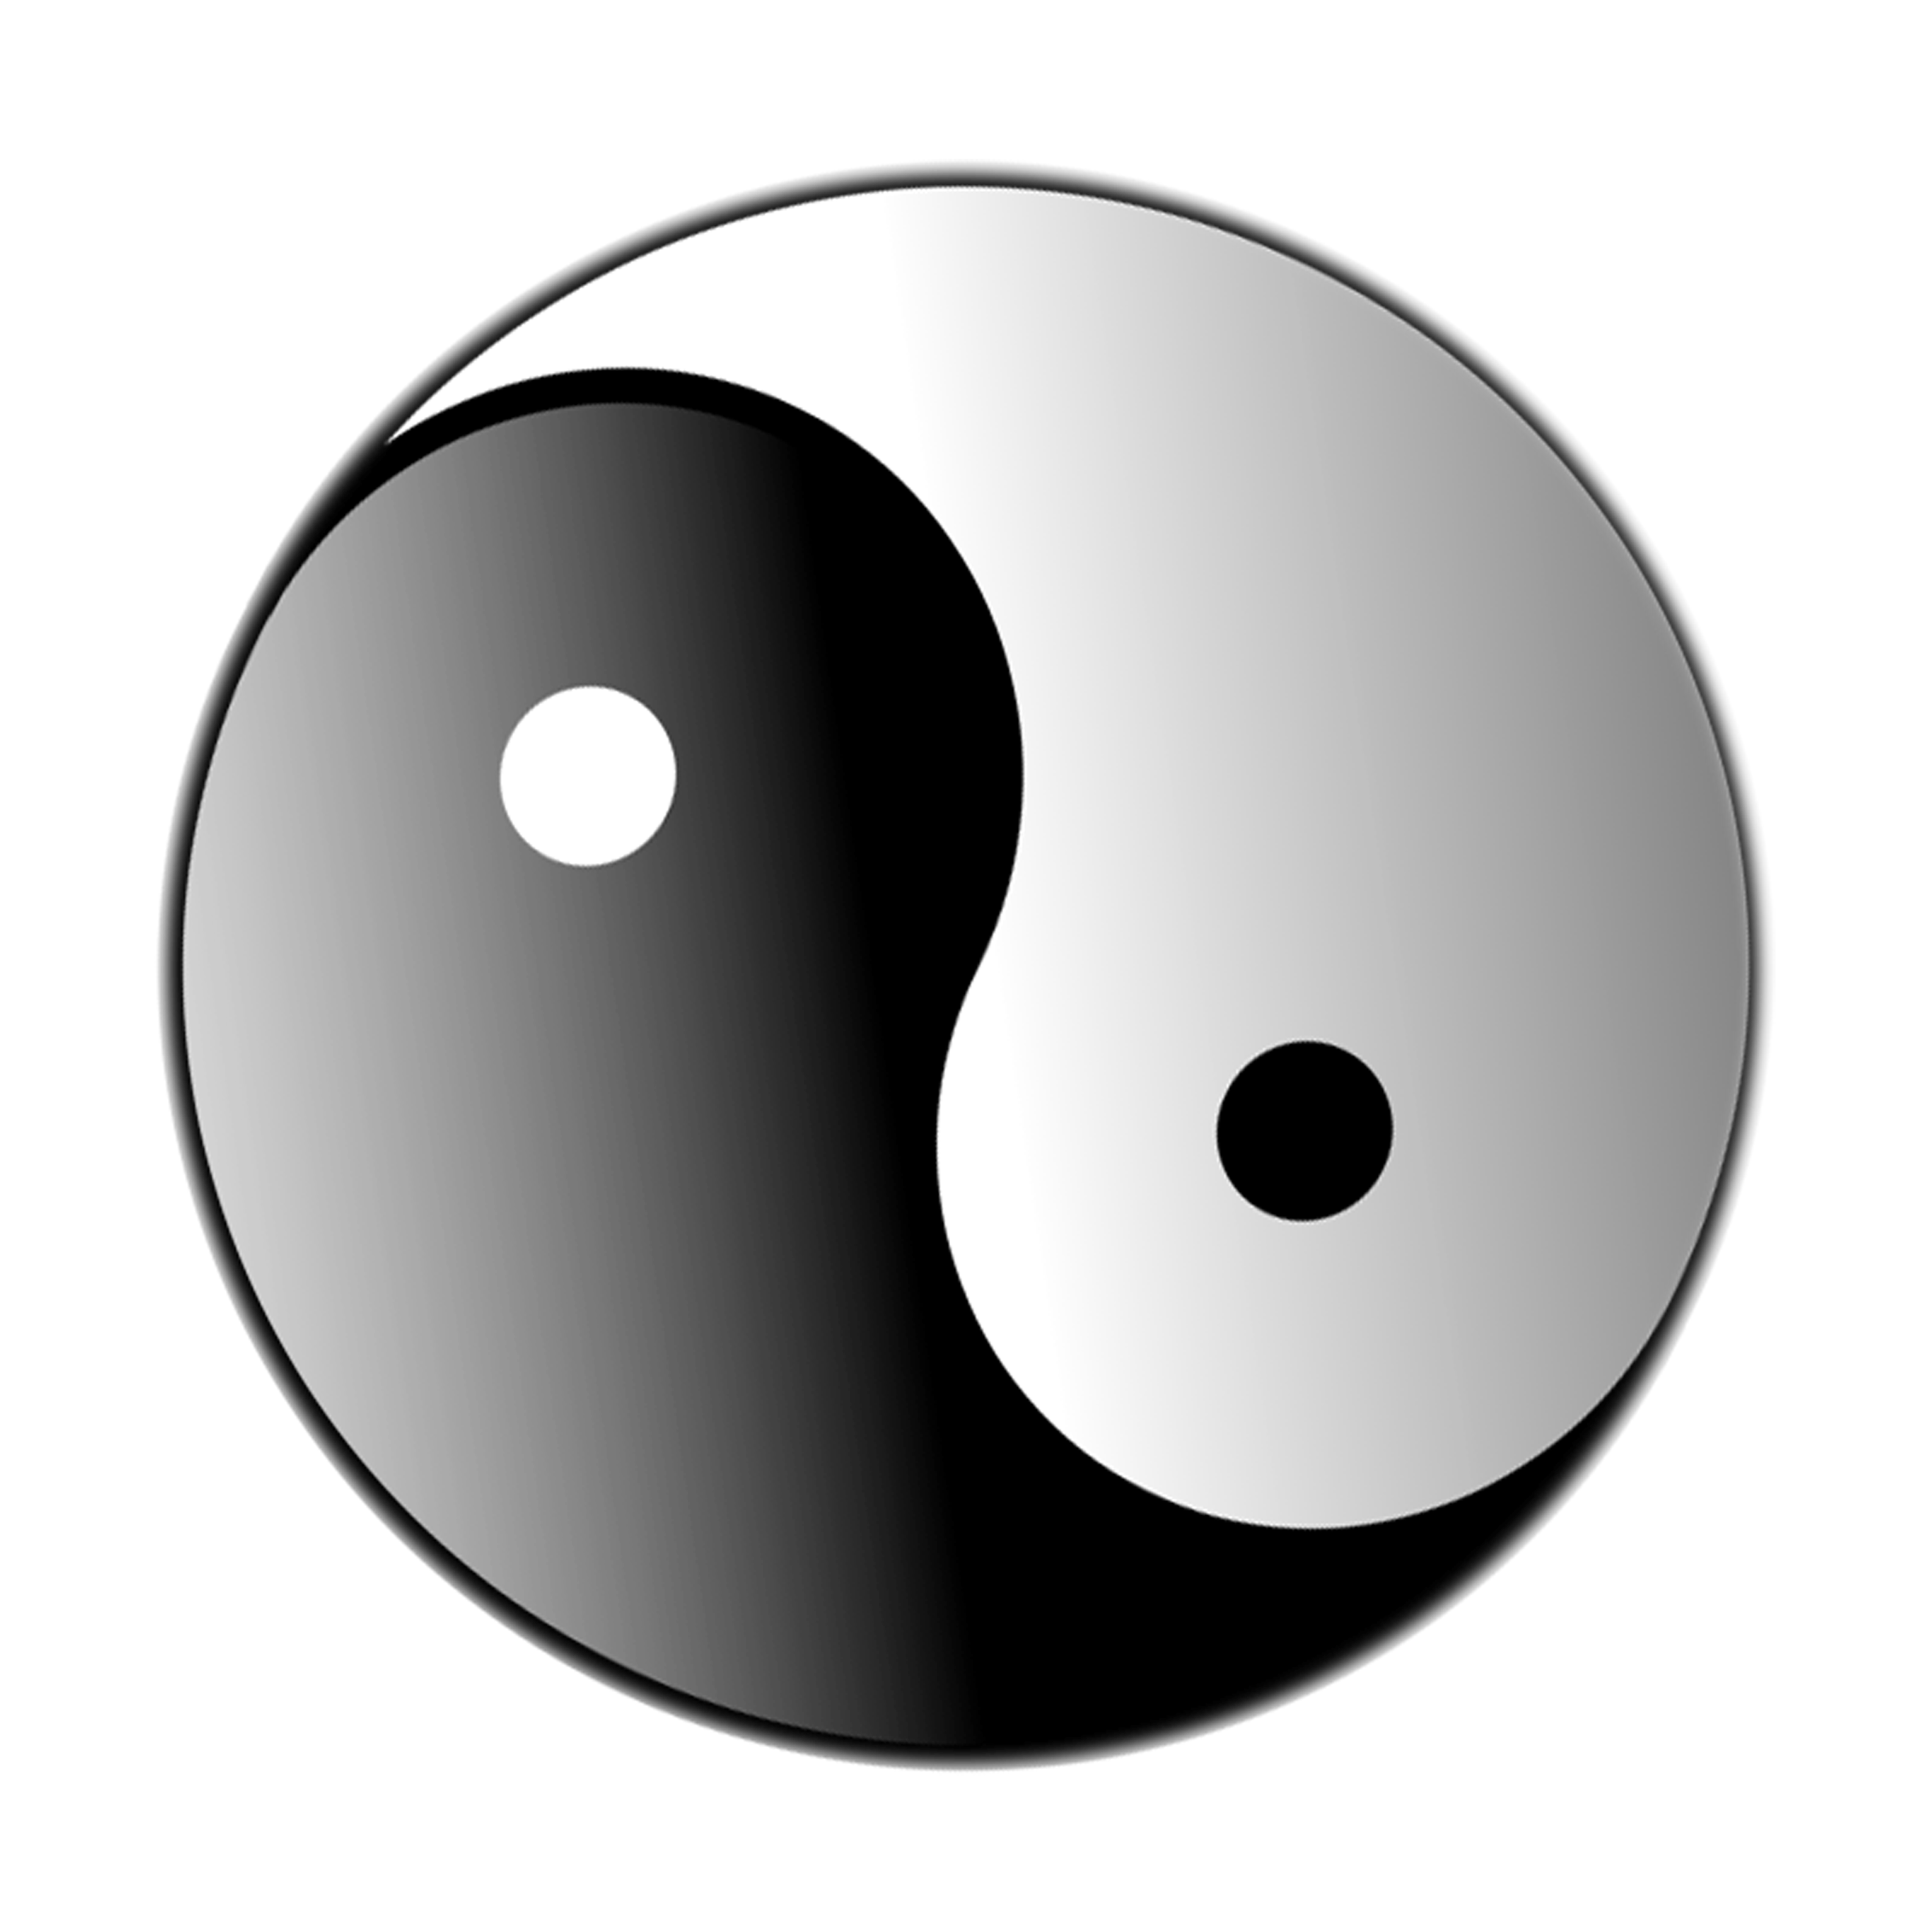 Yin Yang Logo Clipart - Free to use Clip Art Resource